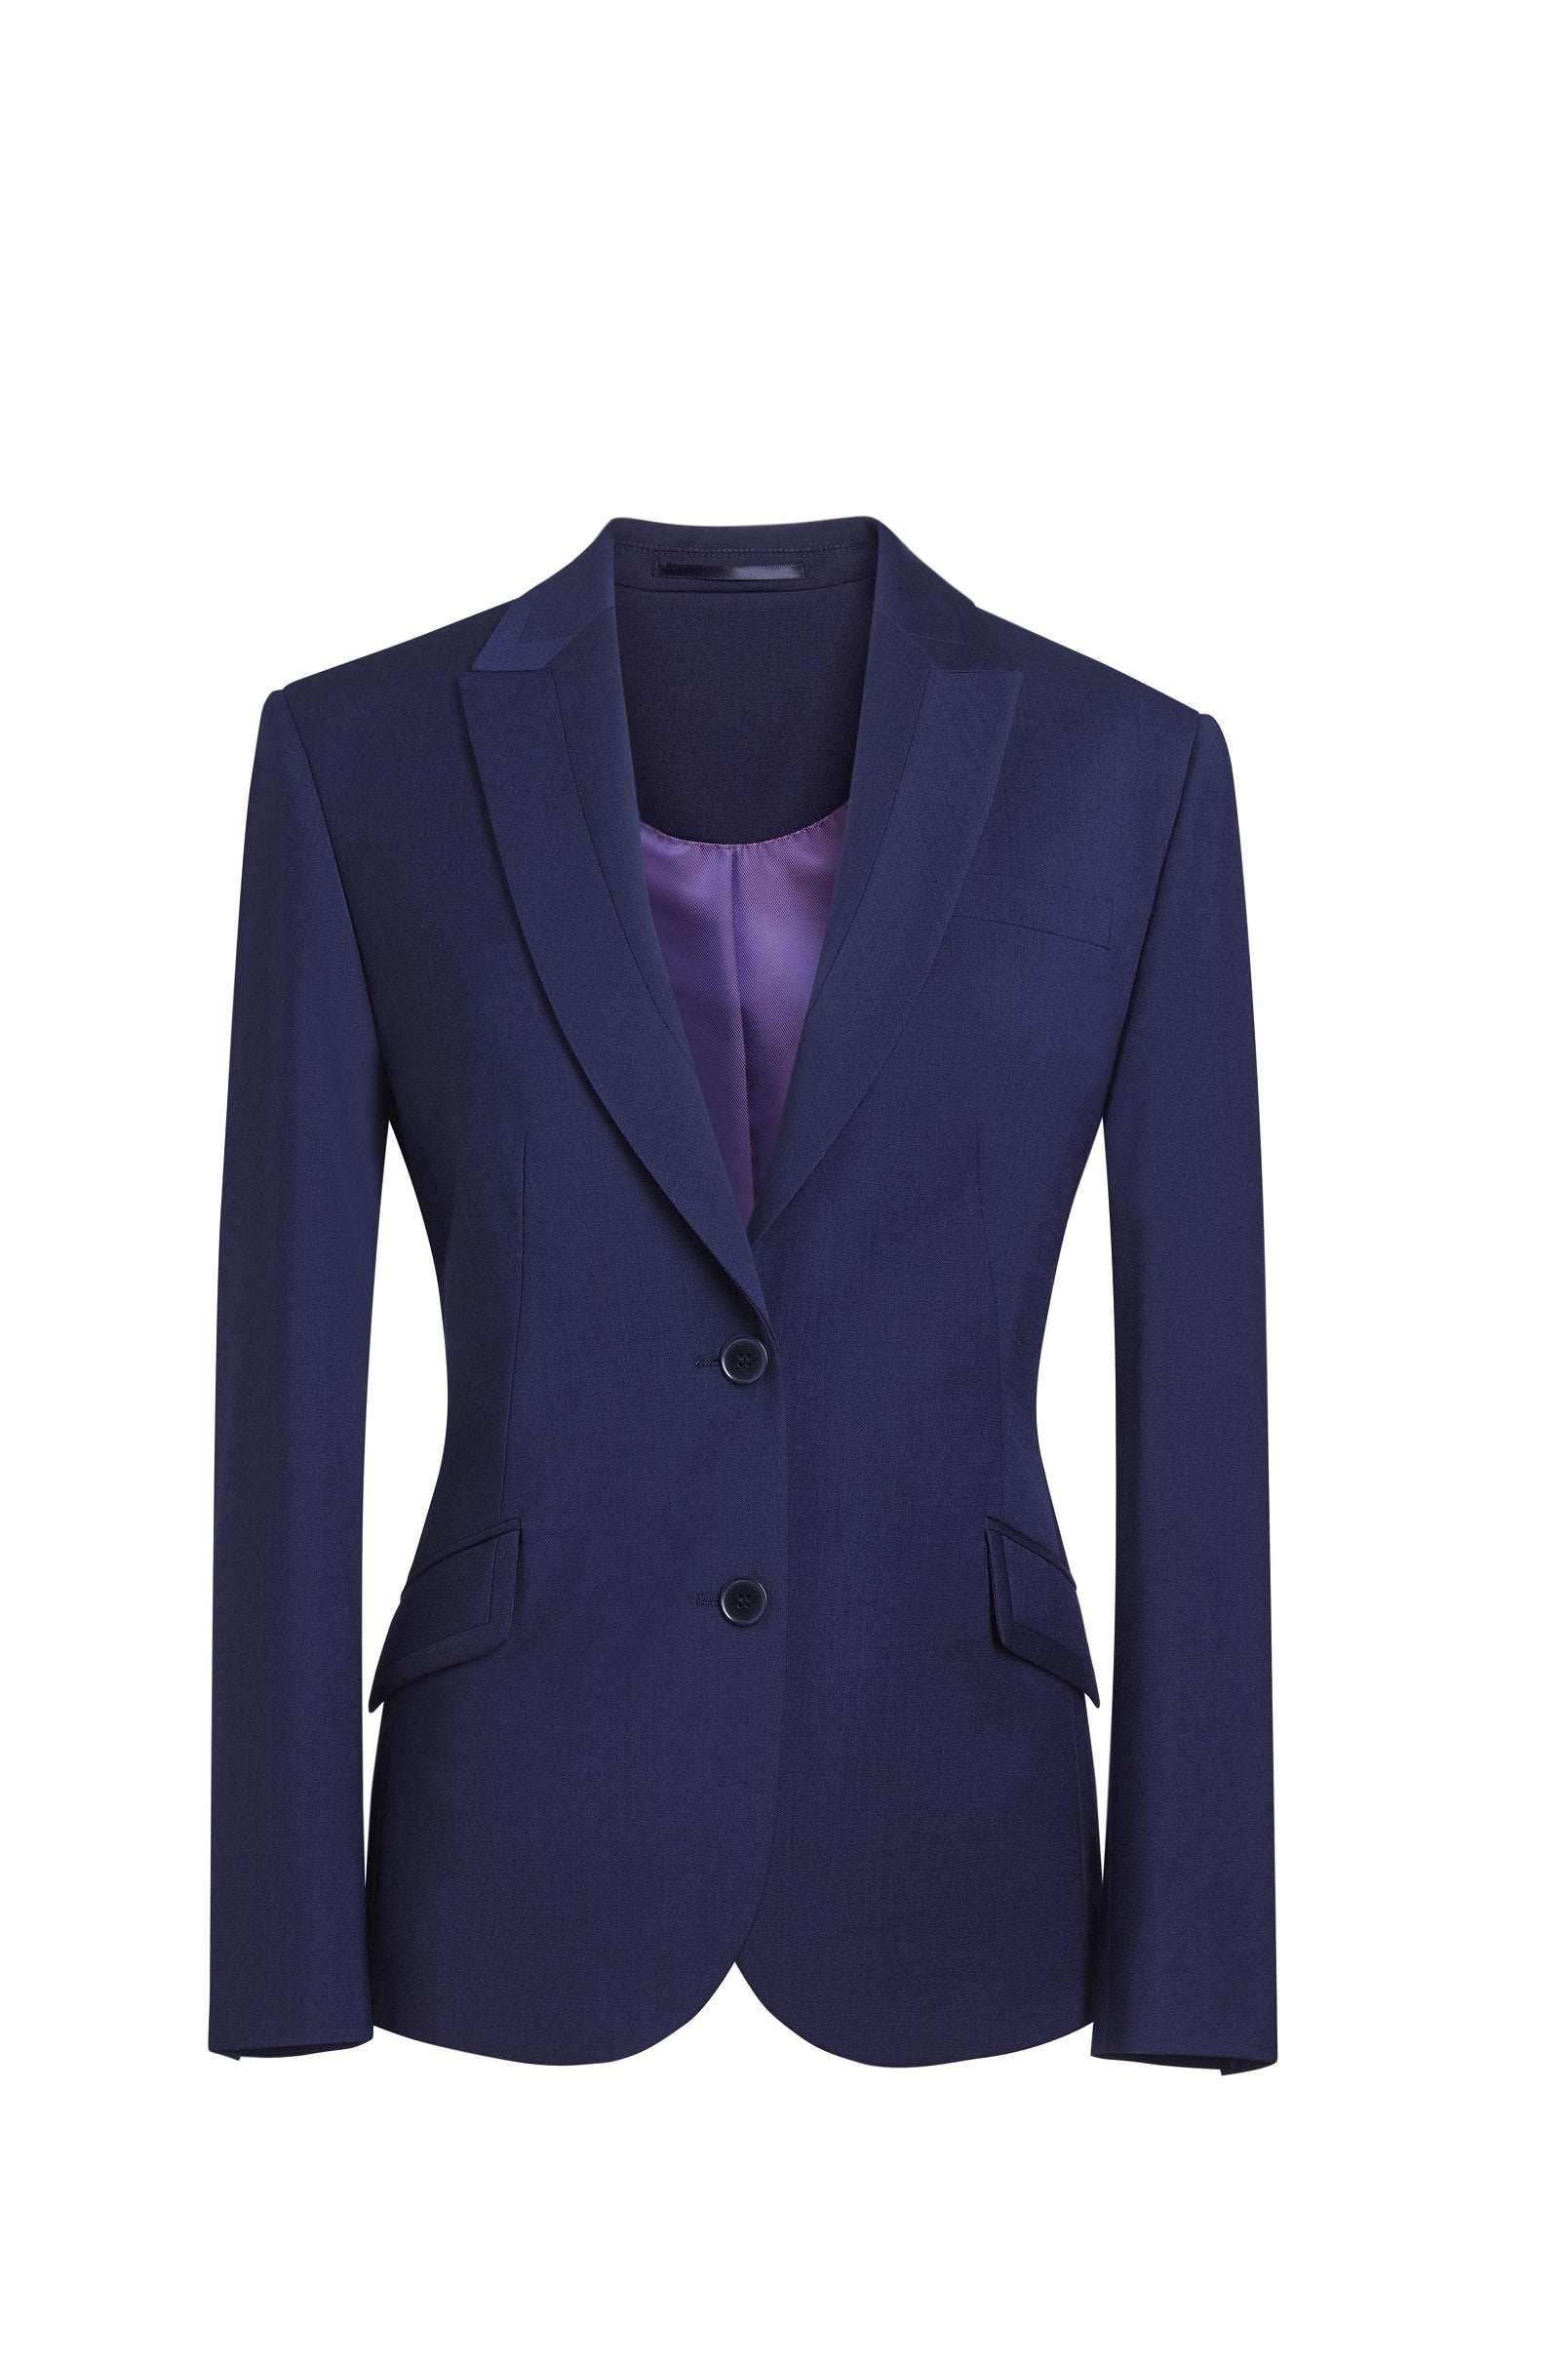 Mid Blue Linen Cotton Twill Tie Wrap Blazer - WOMEN Jackets